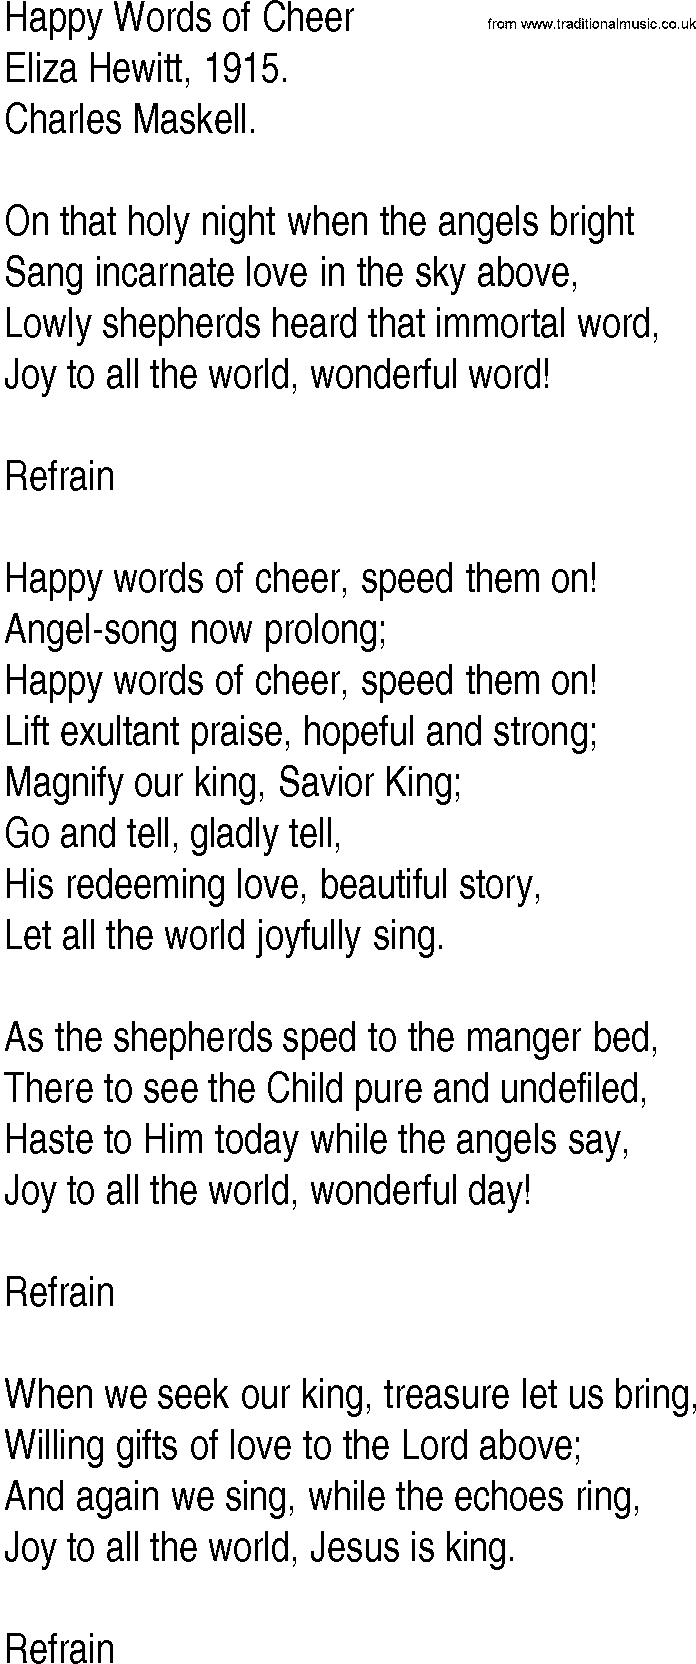 Hymn and Gospel Song: Happy Words of Cheer by Eliza Hewitt lyrics